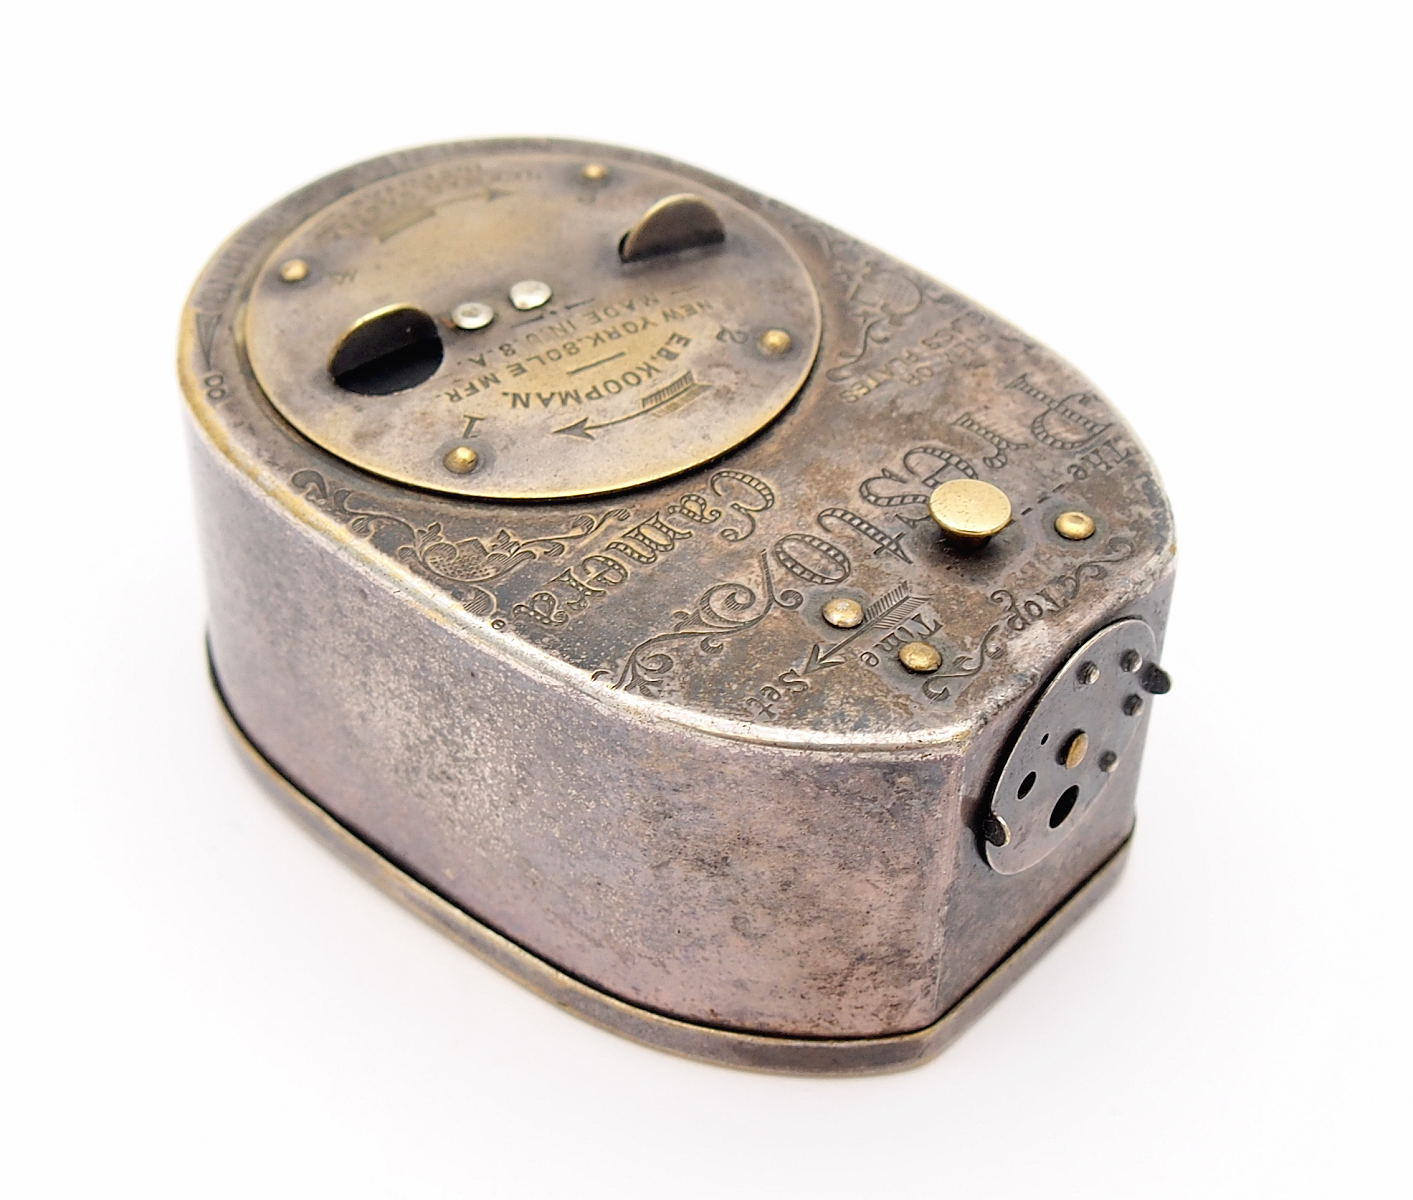 Presto Subminiature Camera c.1896 #9585